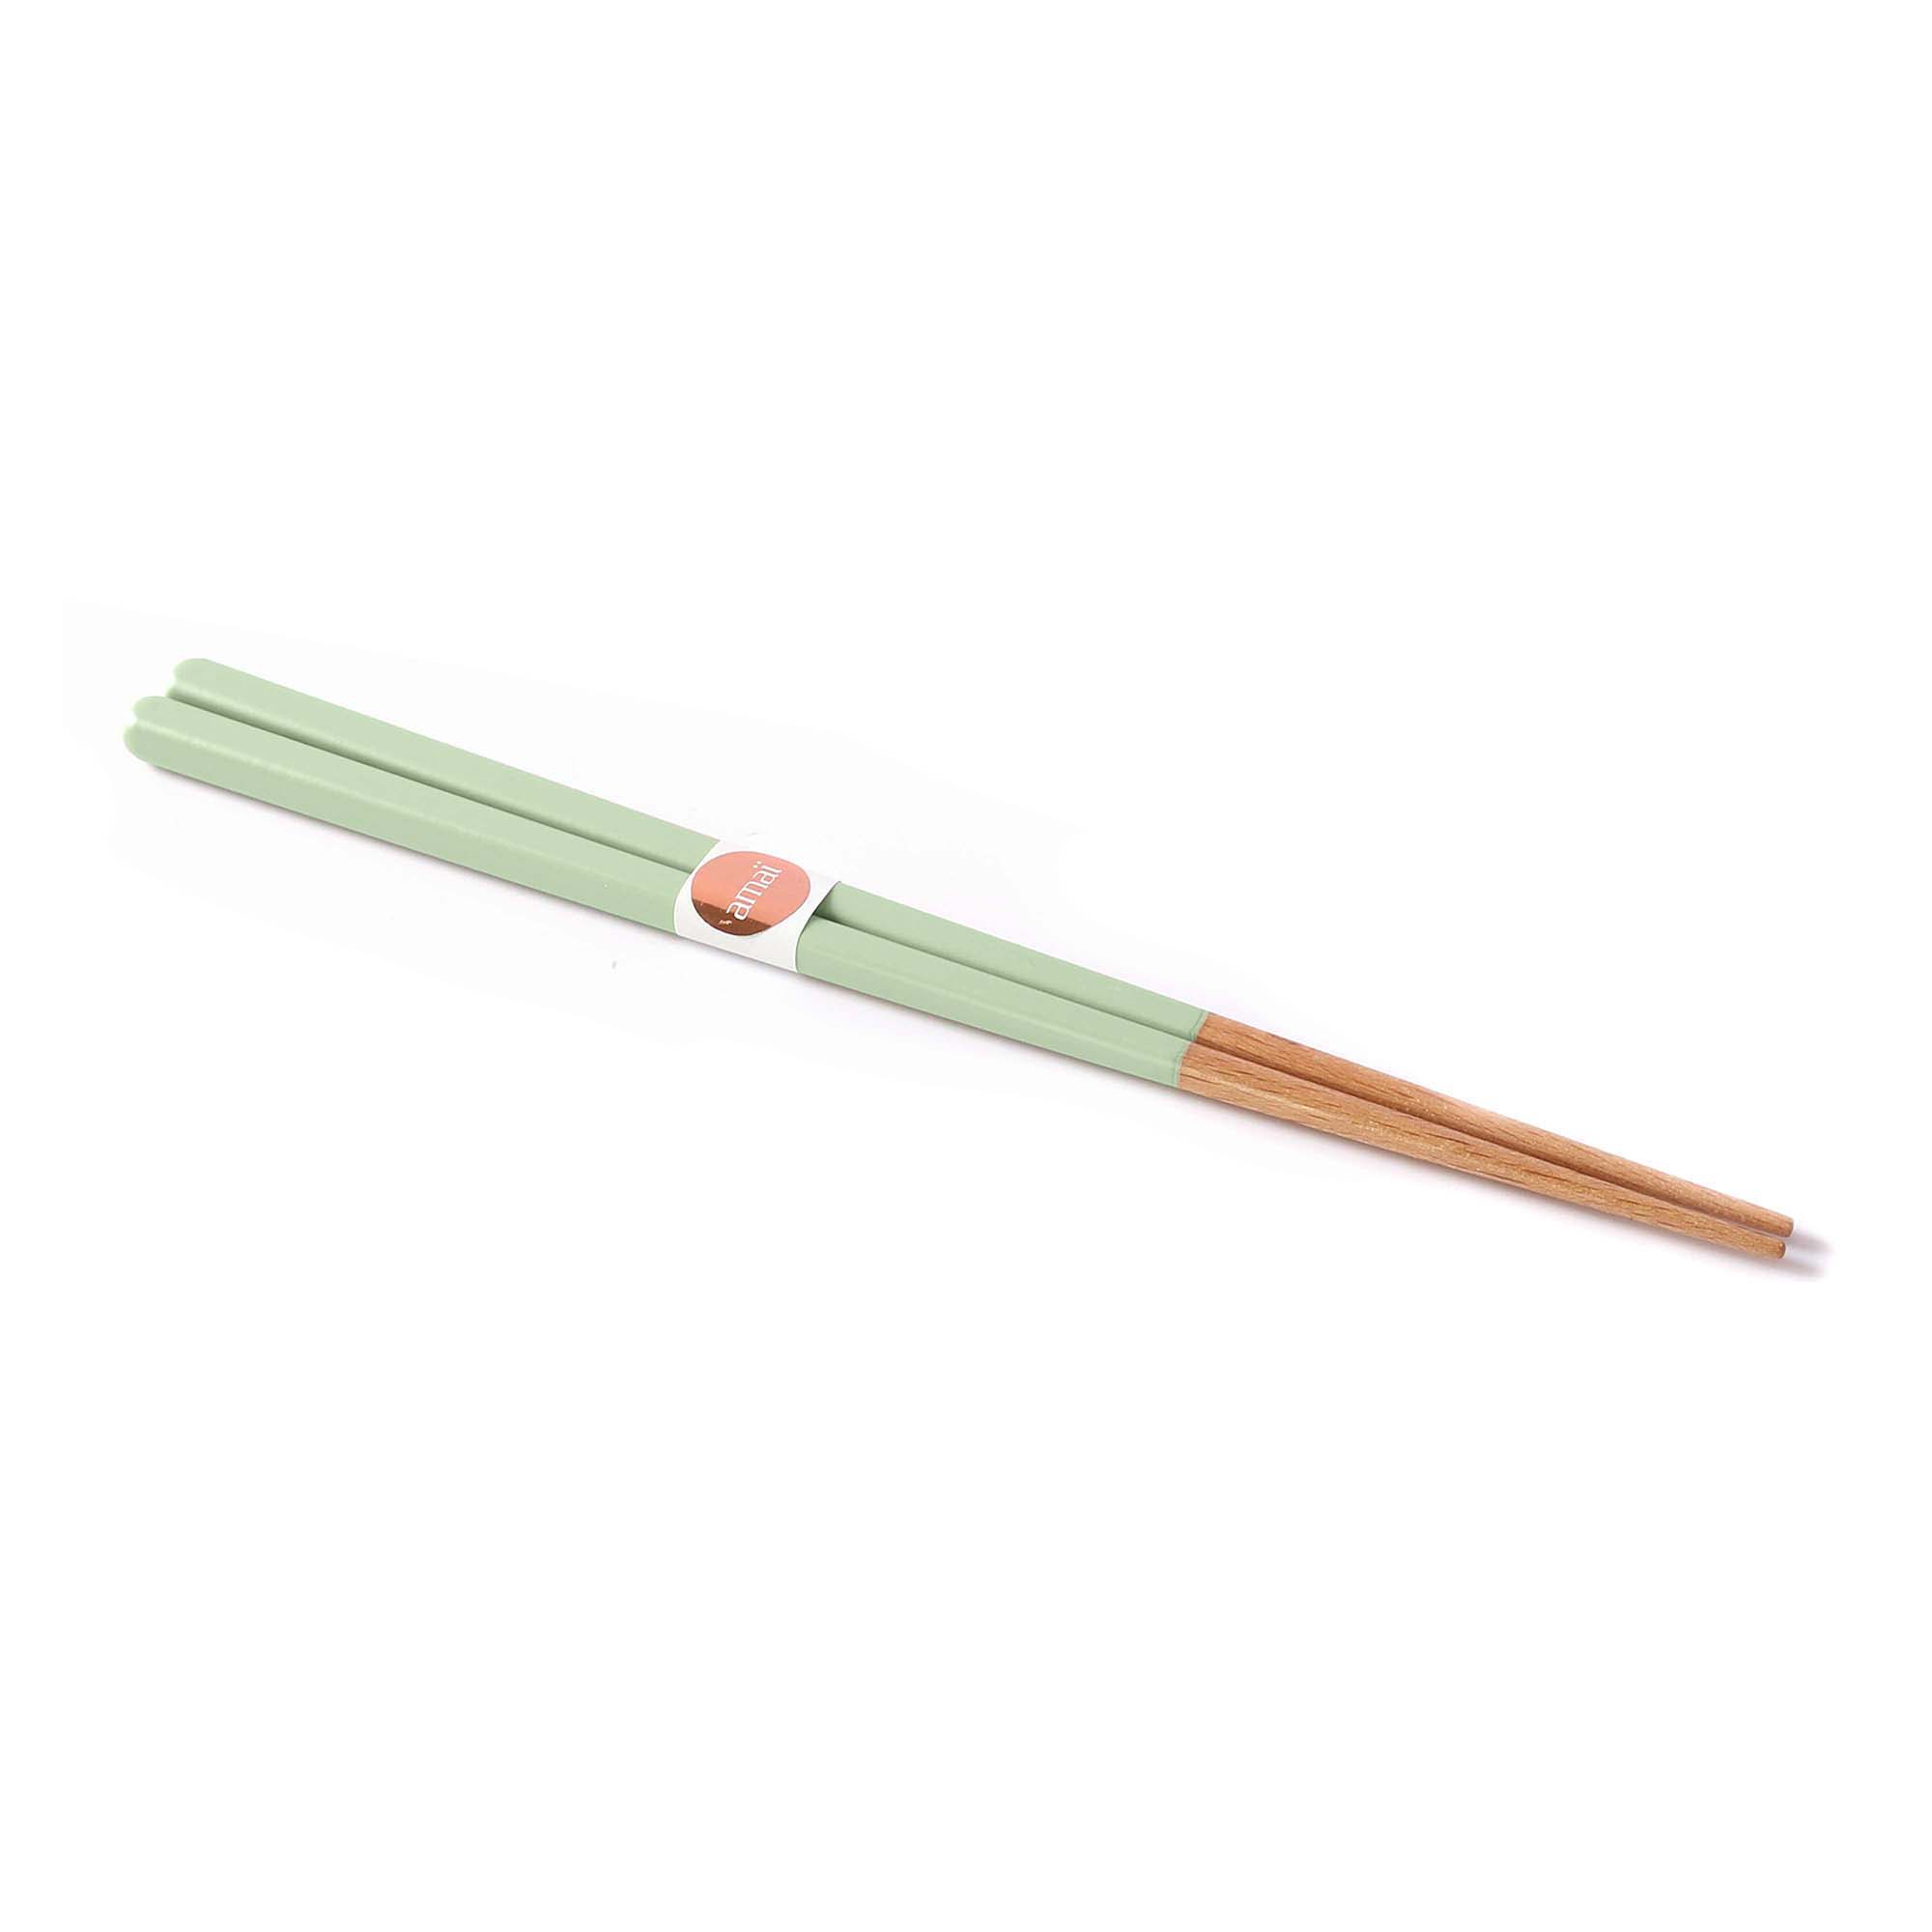 Pokee chopsticks: Celadon